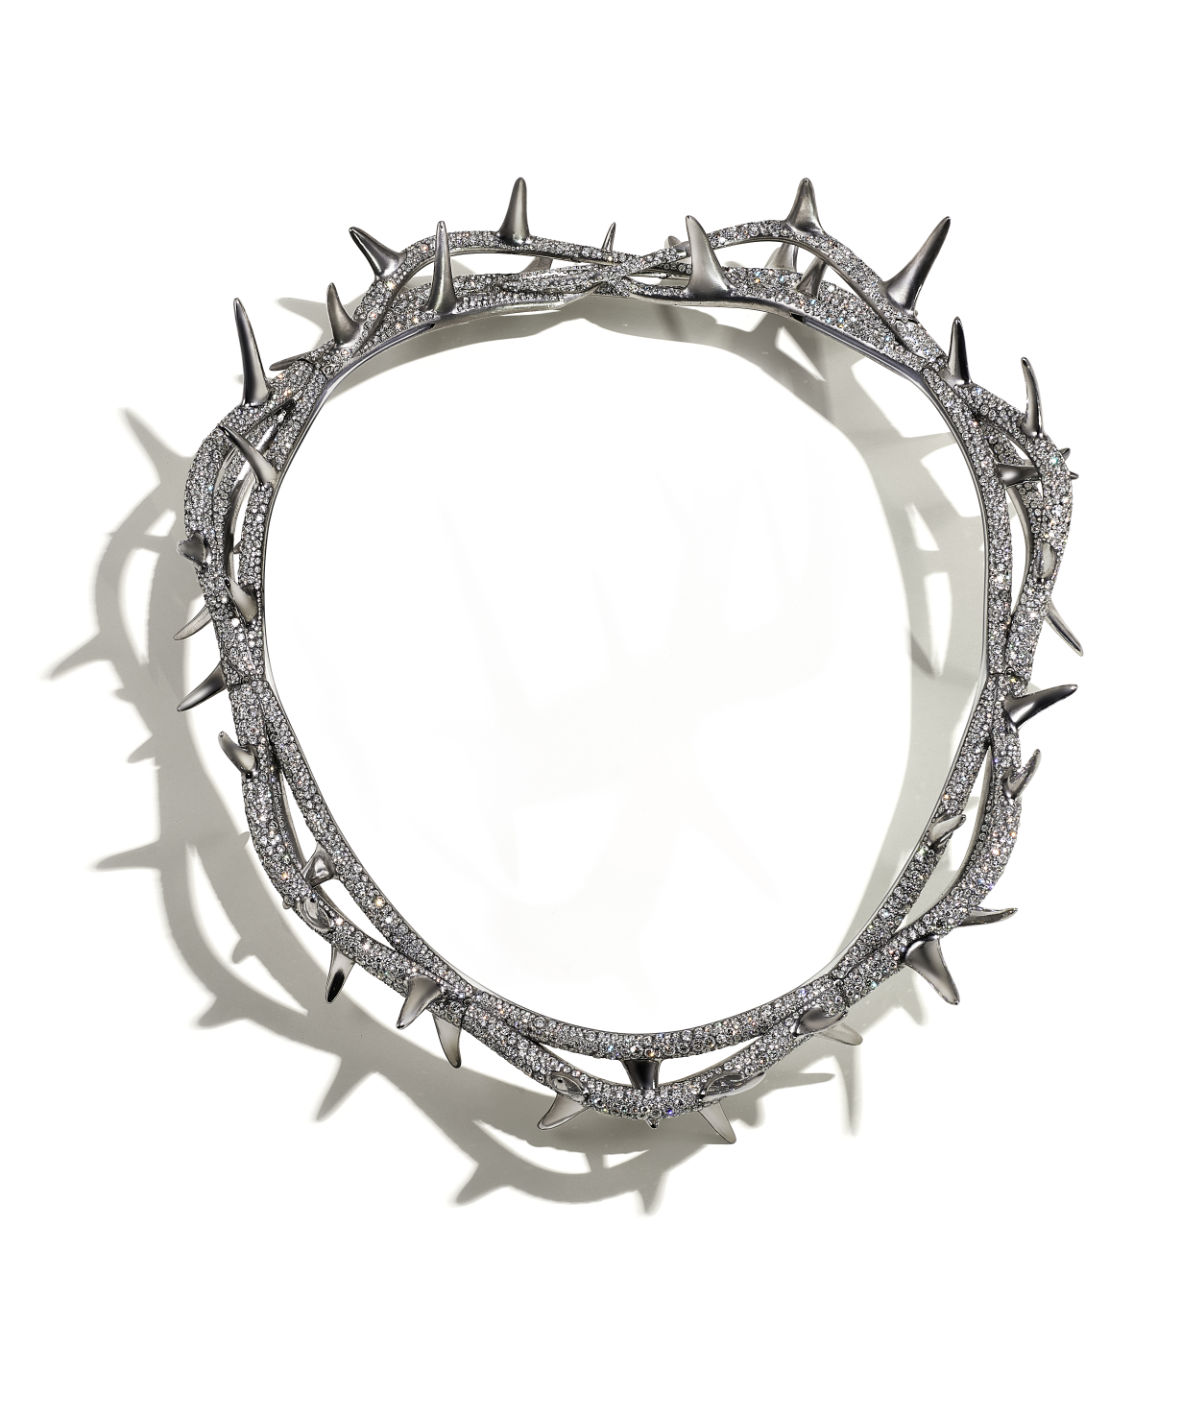 Tiffany & Co. Created Custom “Crown Of Thorns” With Artist Kendrick Lamar